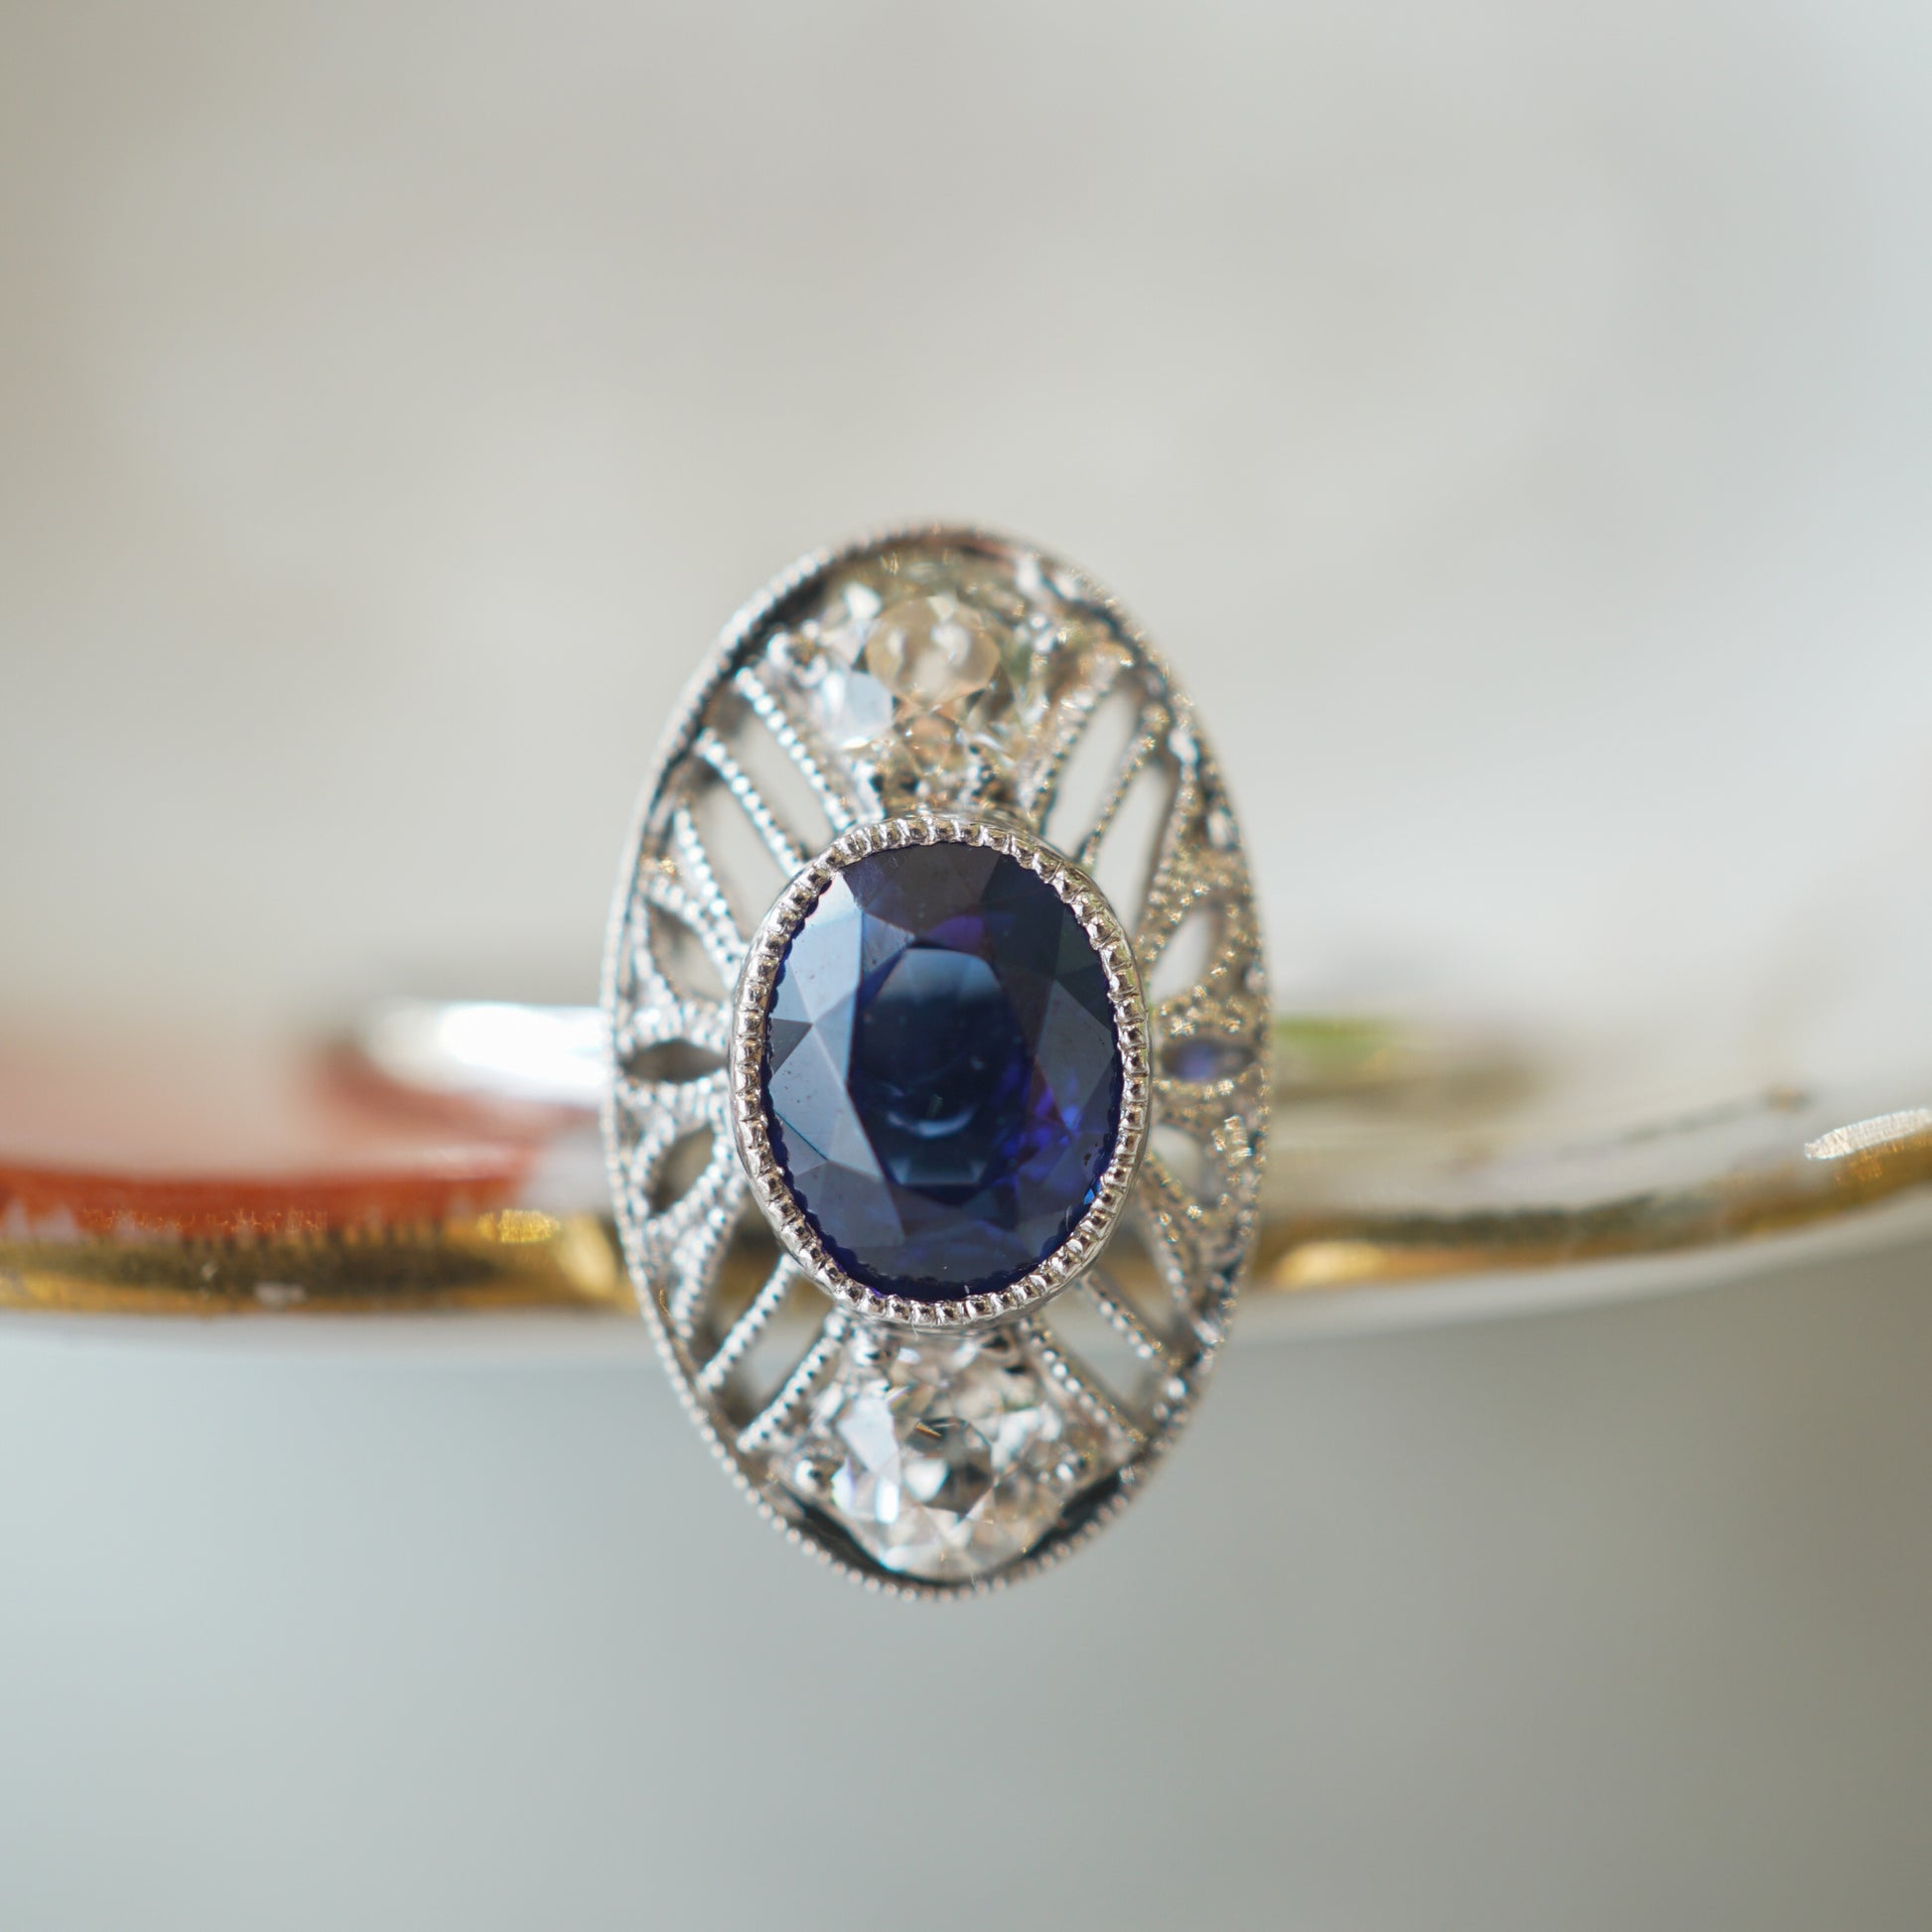 Oval Art Deco Sapphire & Diamond Ring in 14k & PlatinumComposition: 14 Karat White Gold/Platinum Ring Size: 6.5 Total Diamond Weight: .28ct Total Gram Weight: 2.5 g Inscription: 14k
      